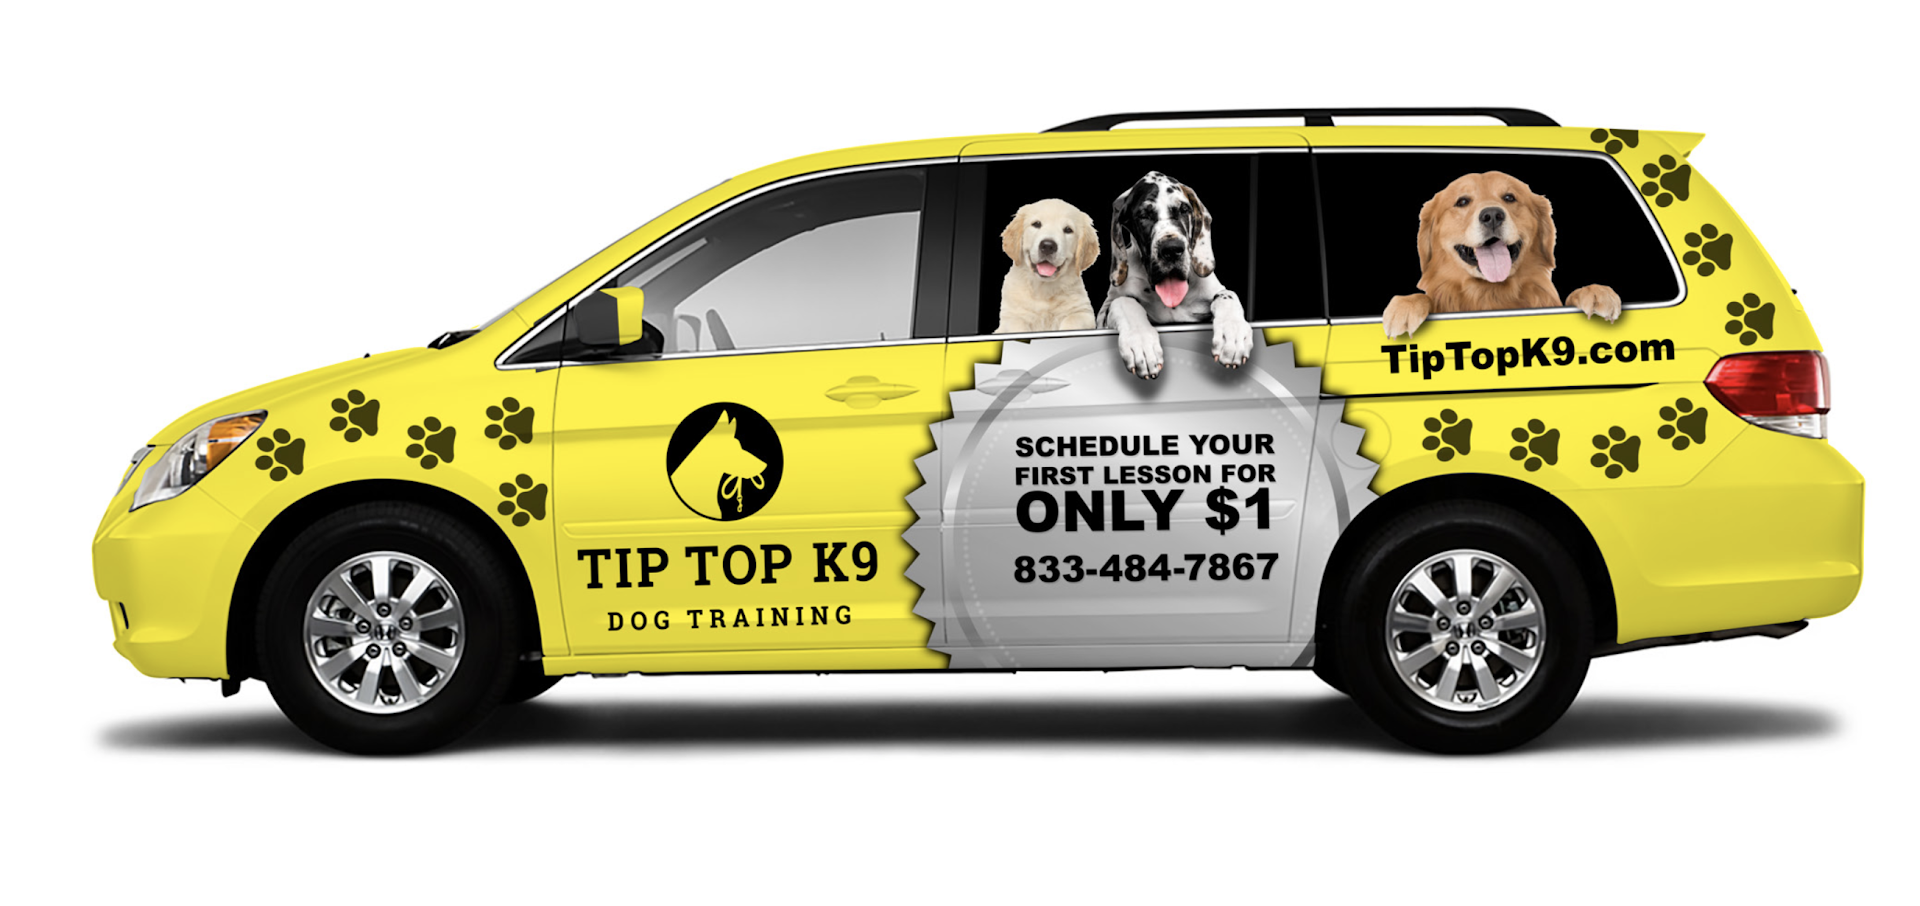 Tip Top K9 Orlando Dog Training